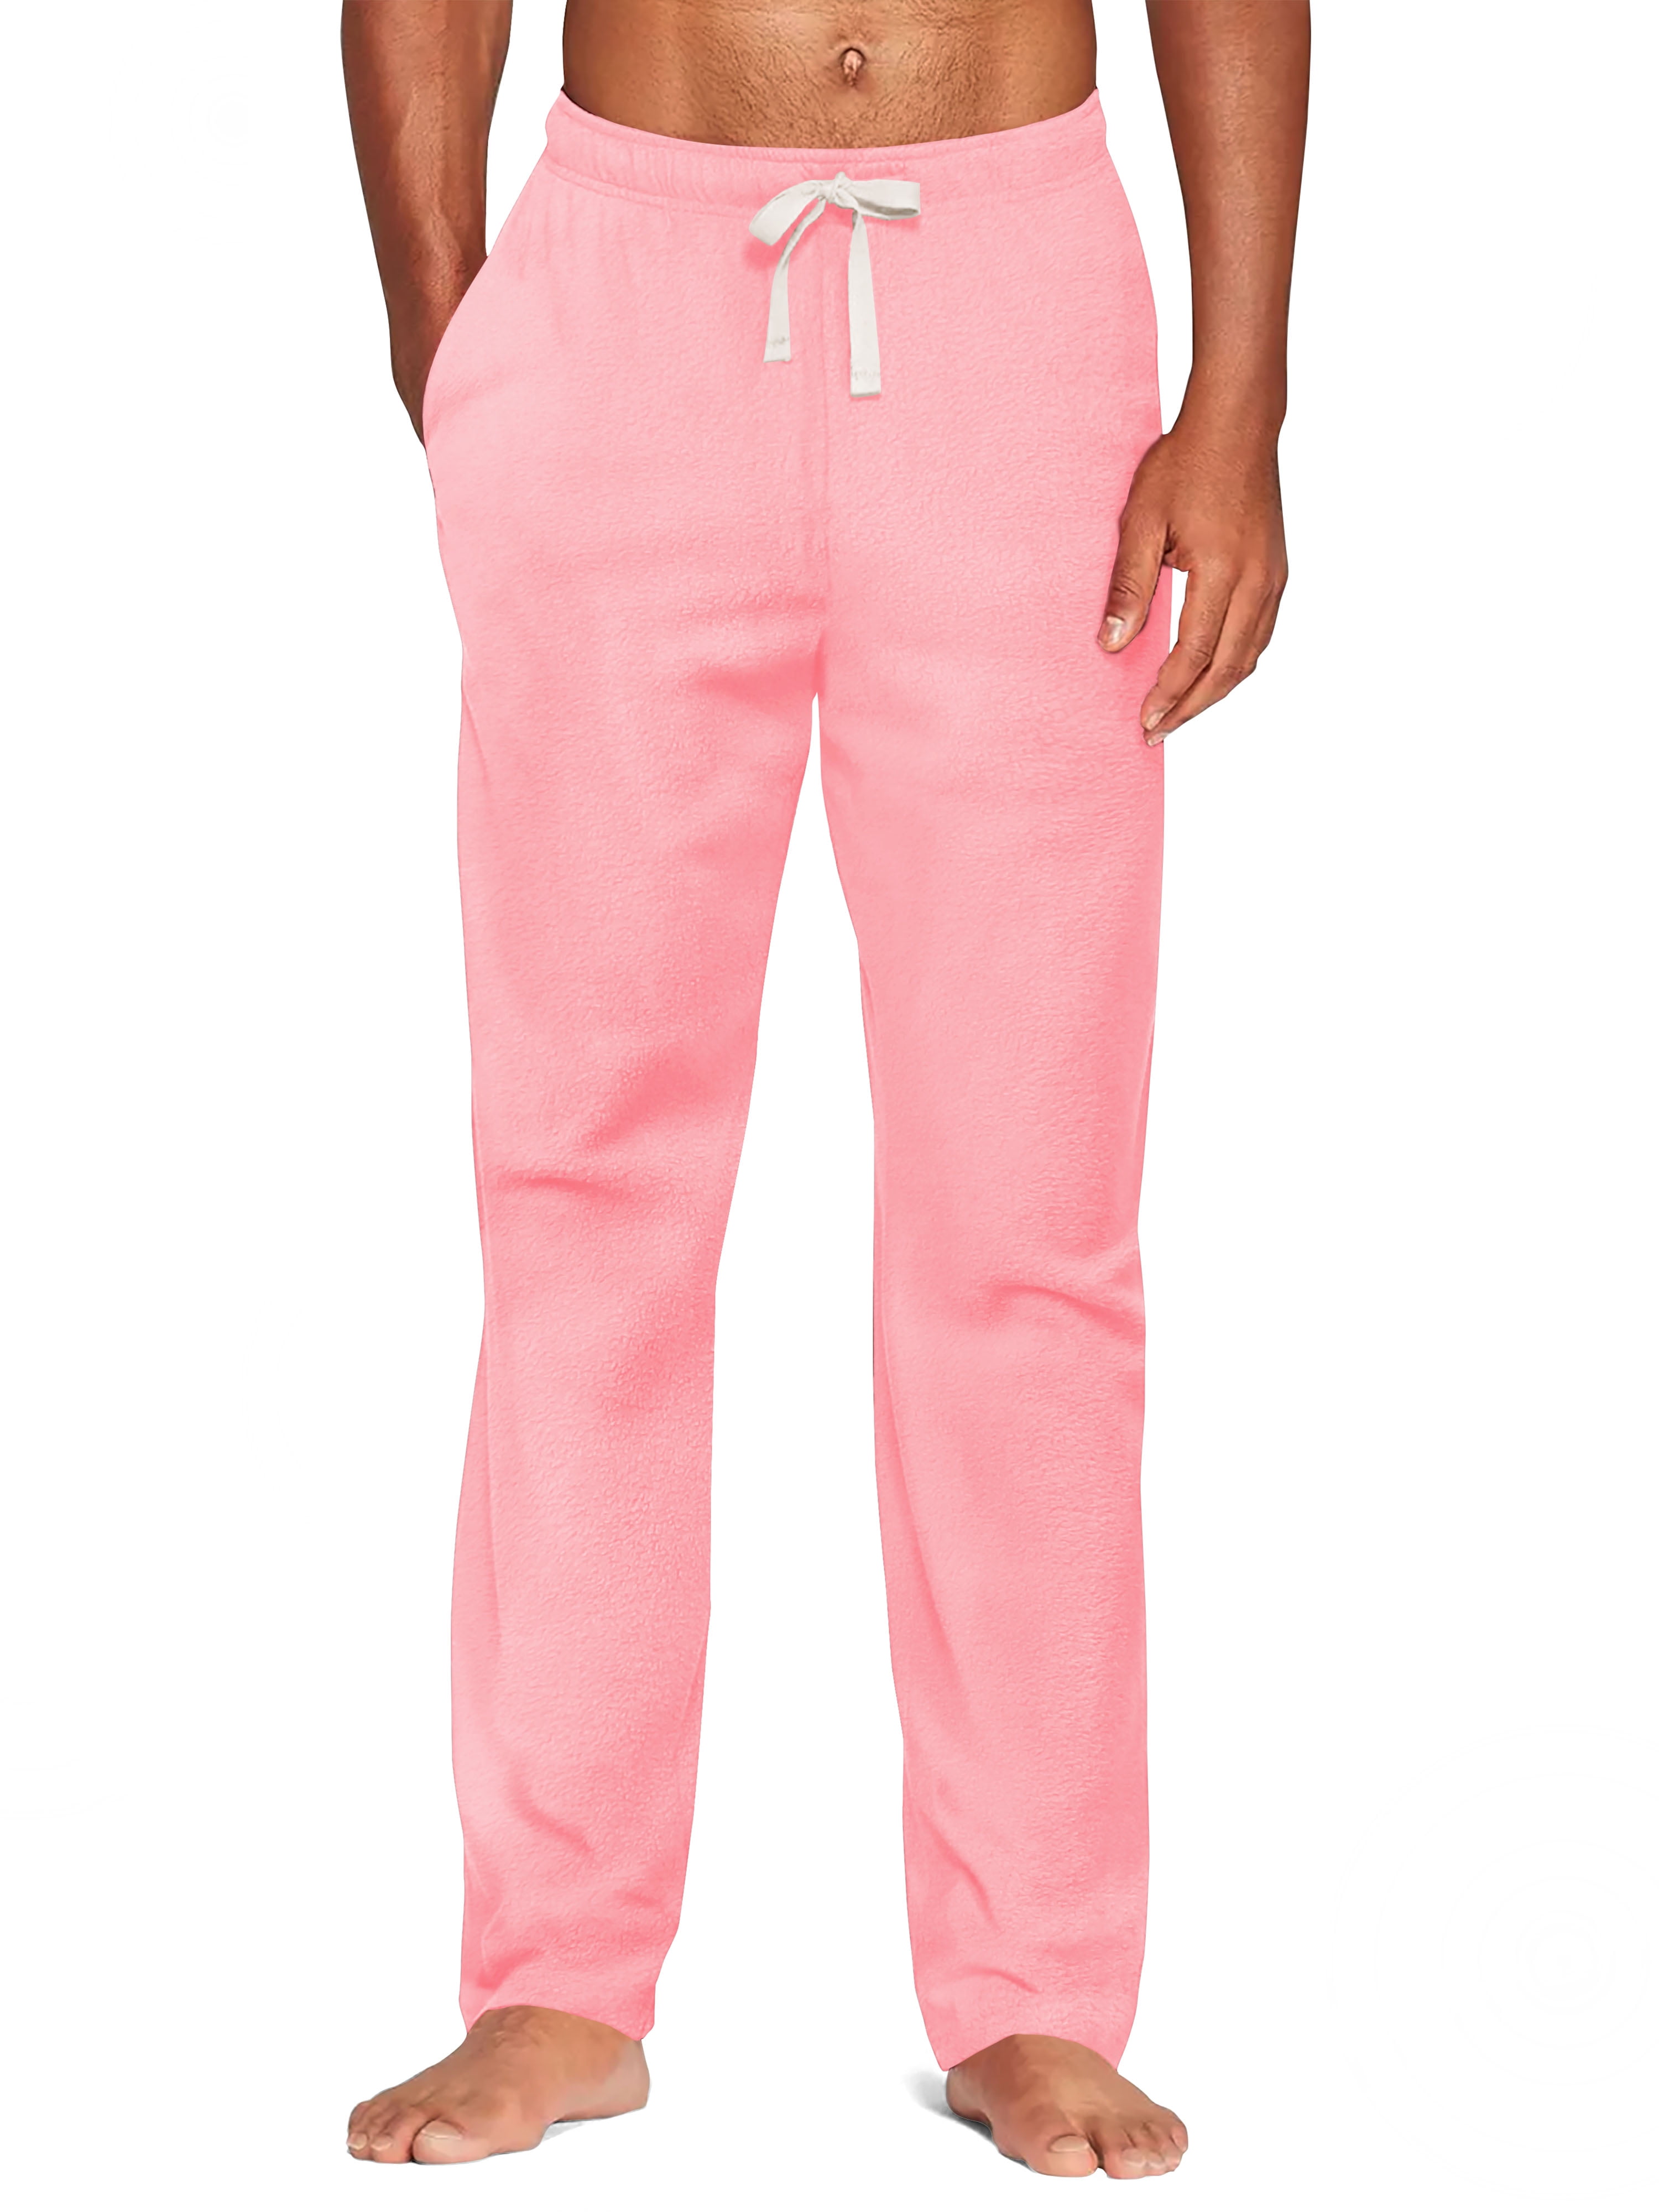 lee pink fuzzy jeans